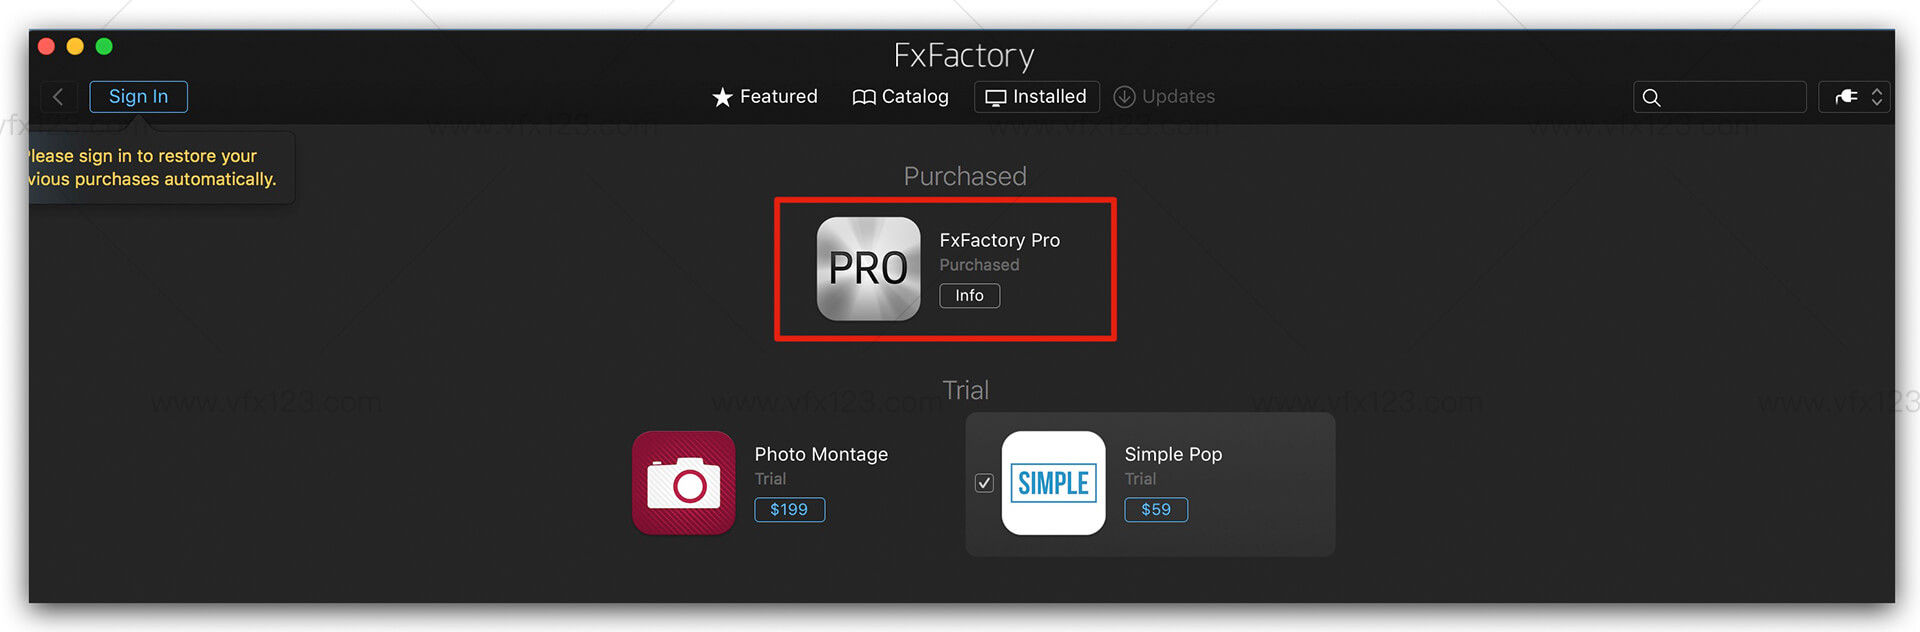 fxfactory for windows 7 kickass